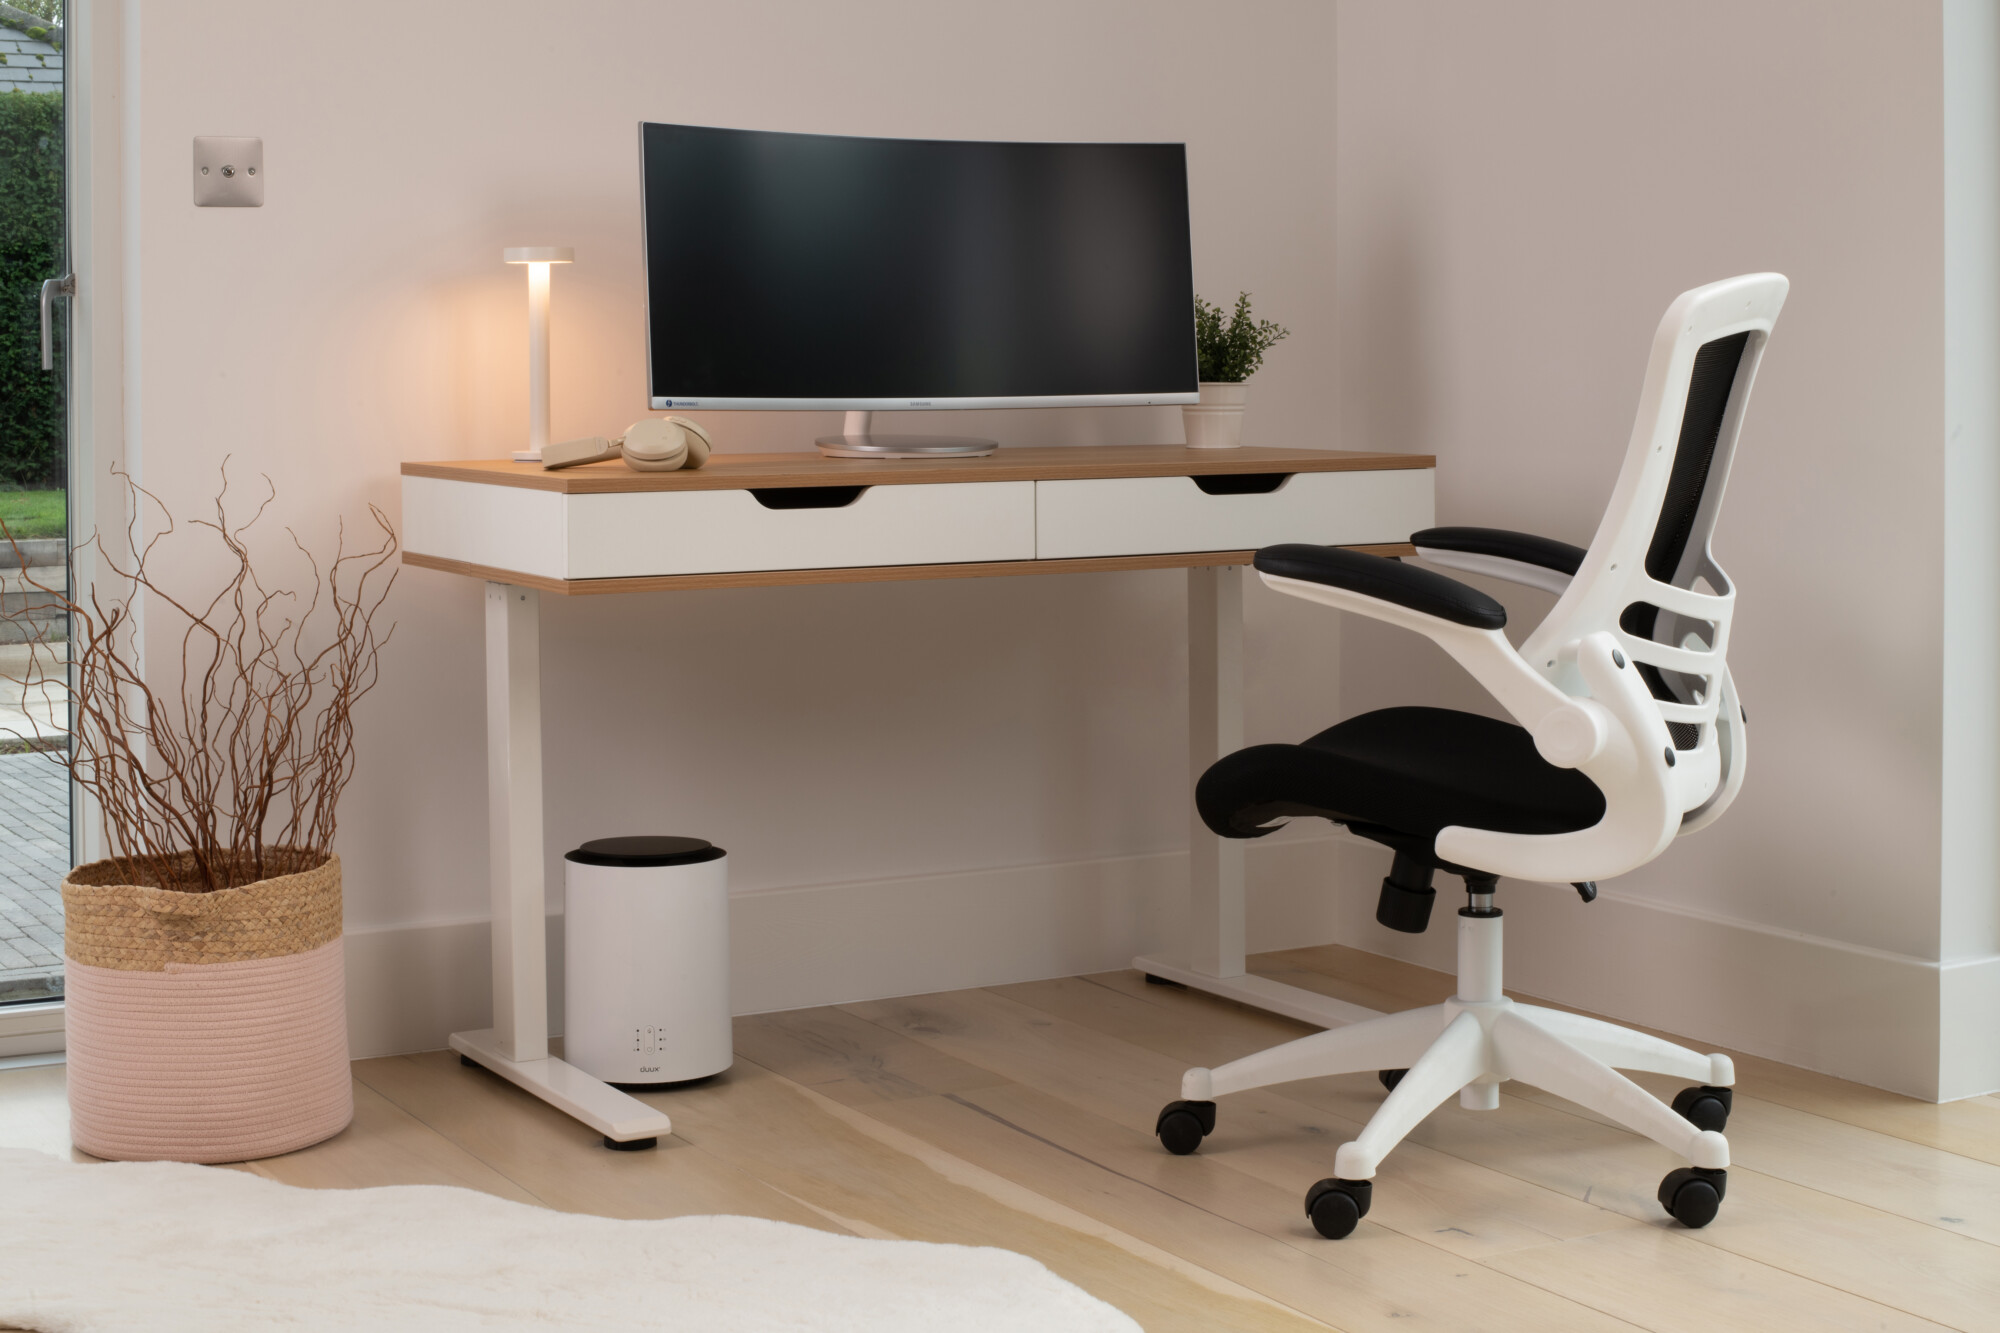 Home office setup that improve health